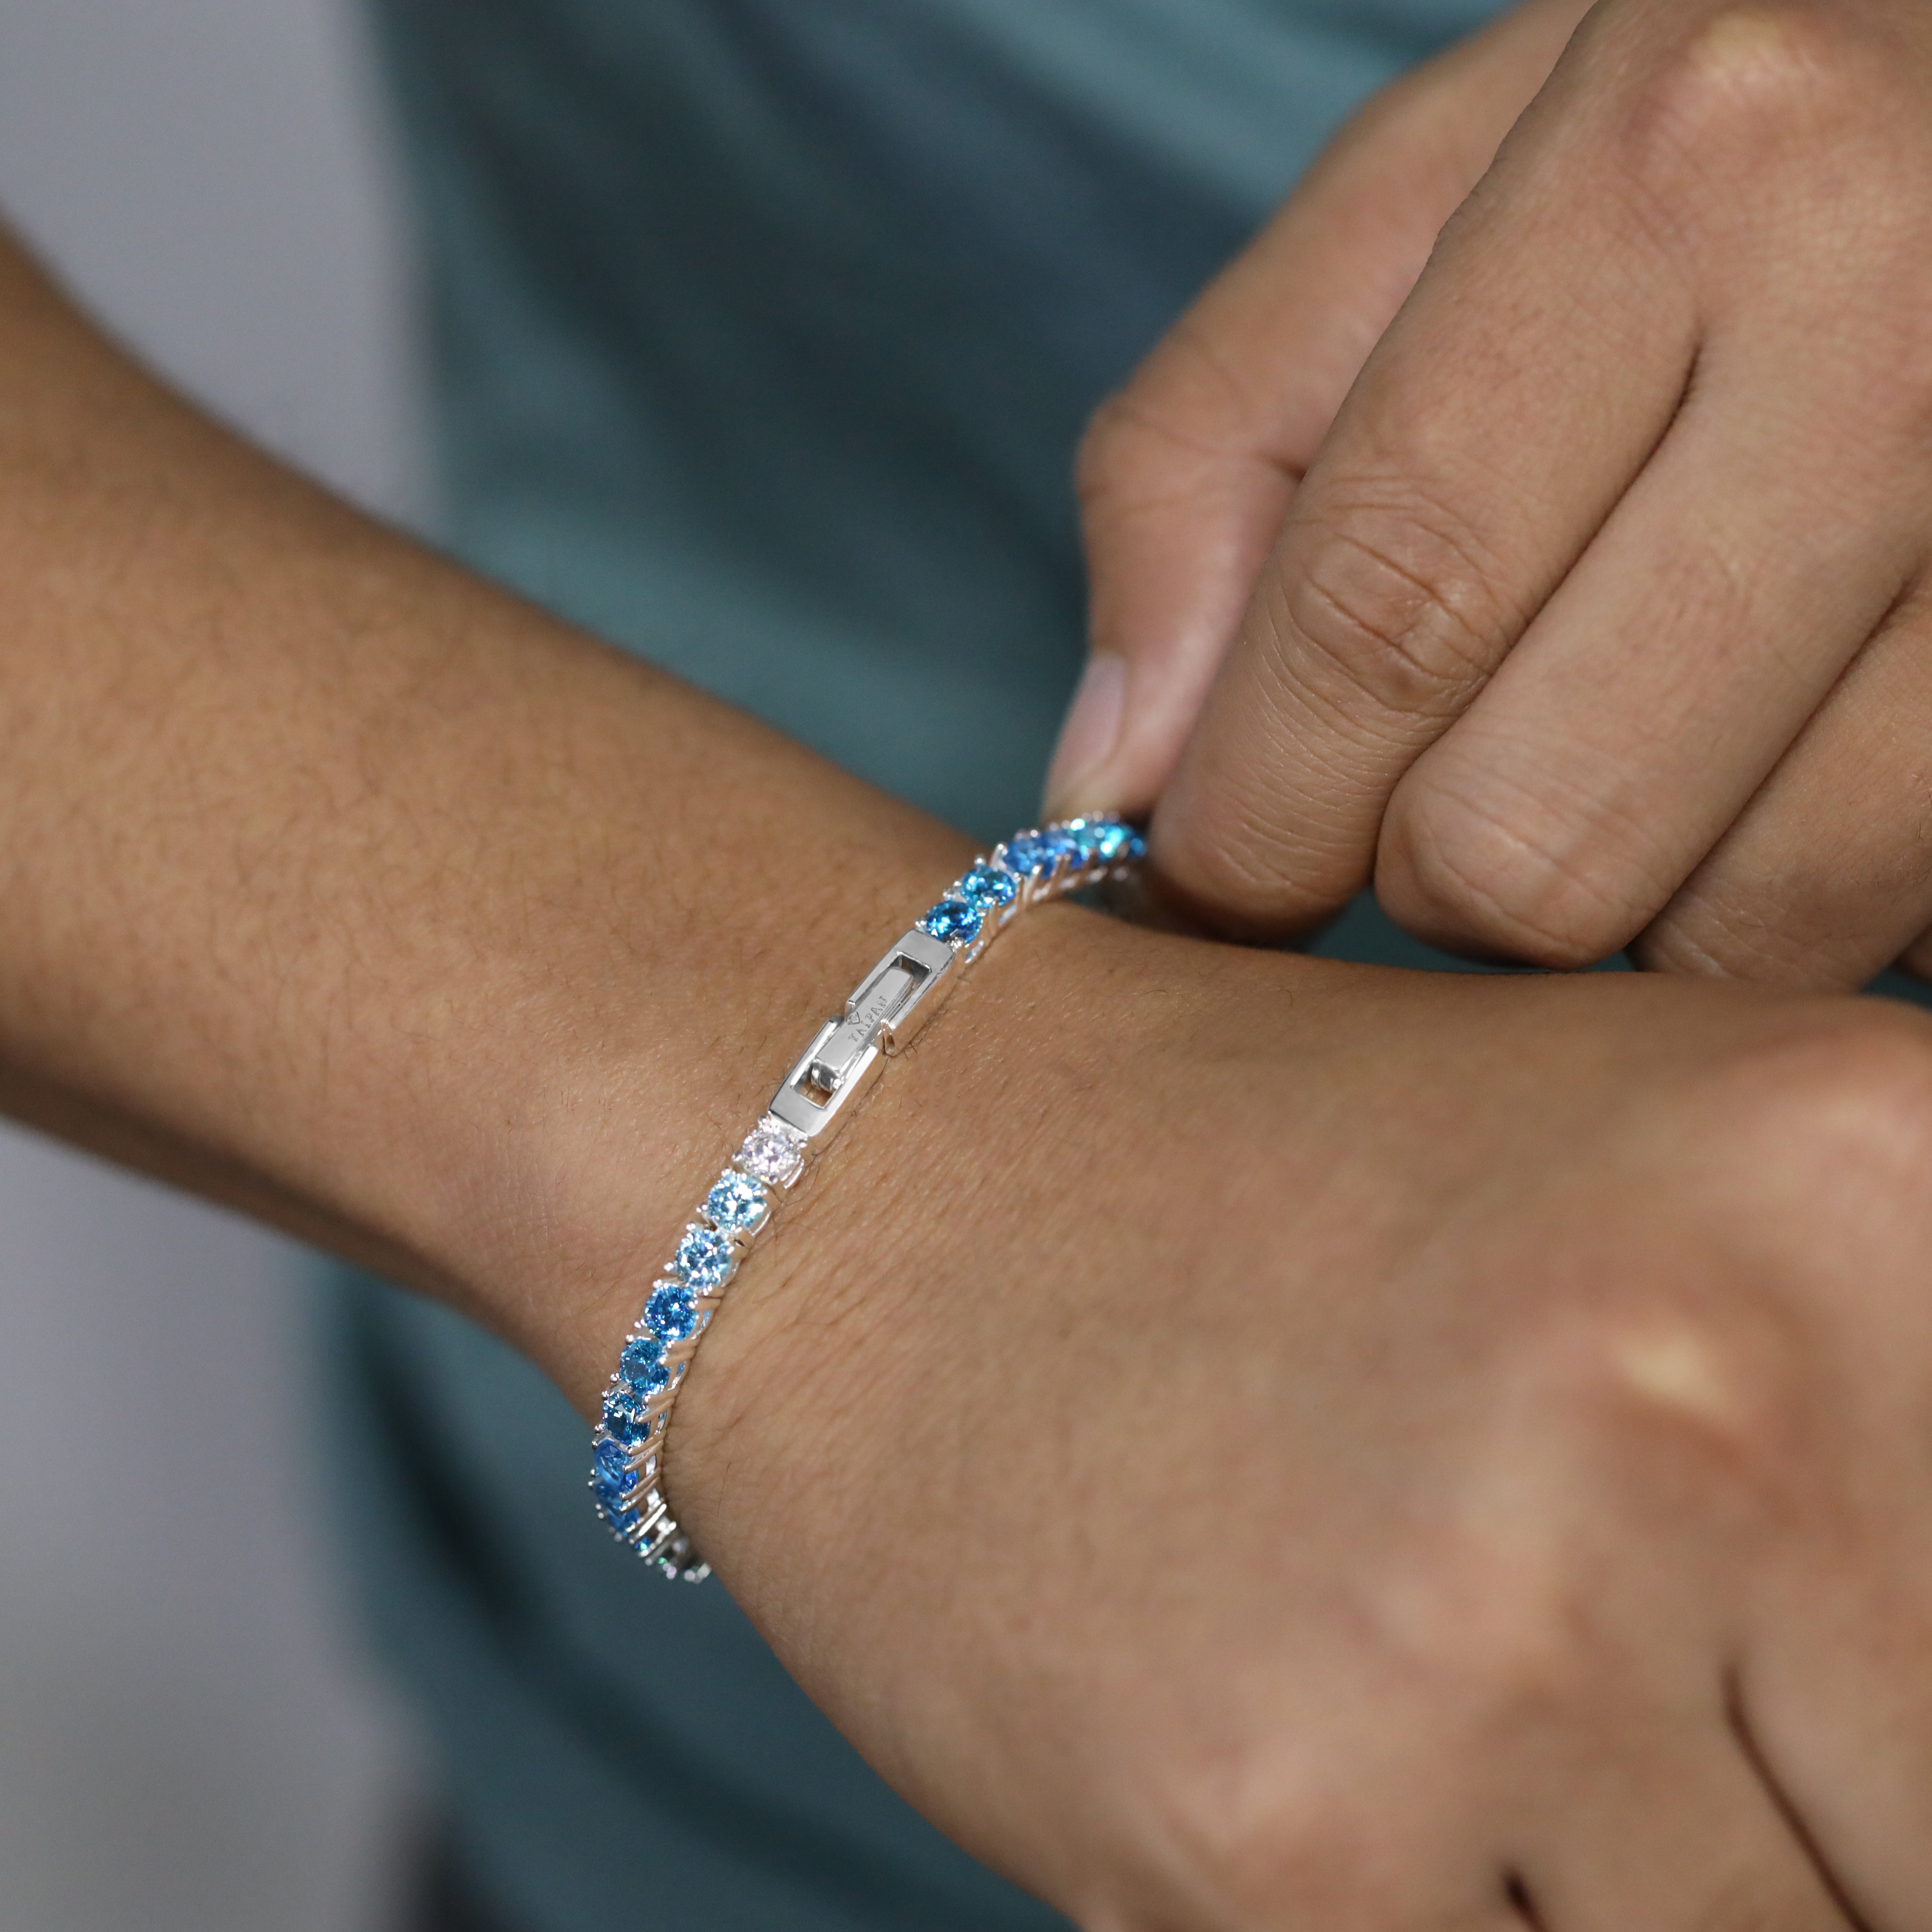 4mm Tennis chain bracelet Armband blau Farbverlauf - aus 925 Sterlingsilber - Taipan Schmuck